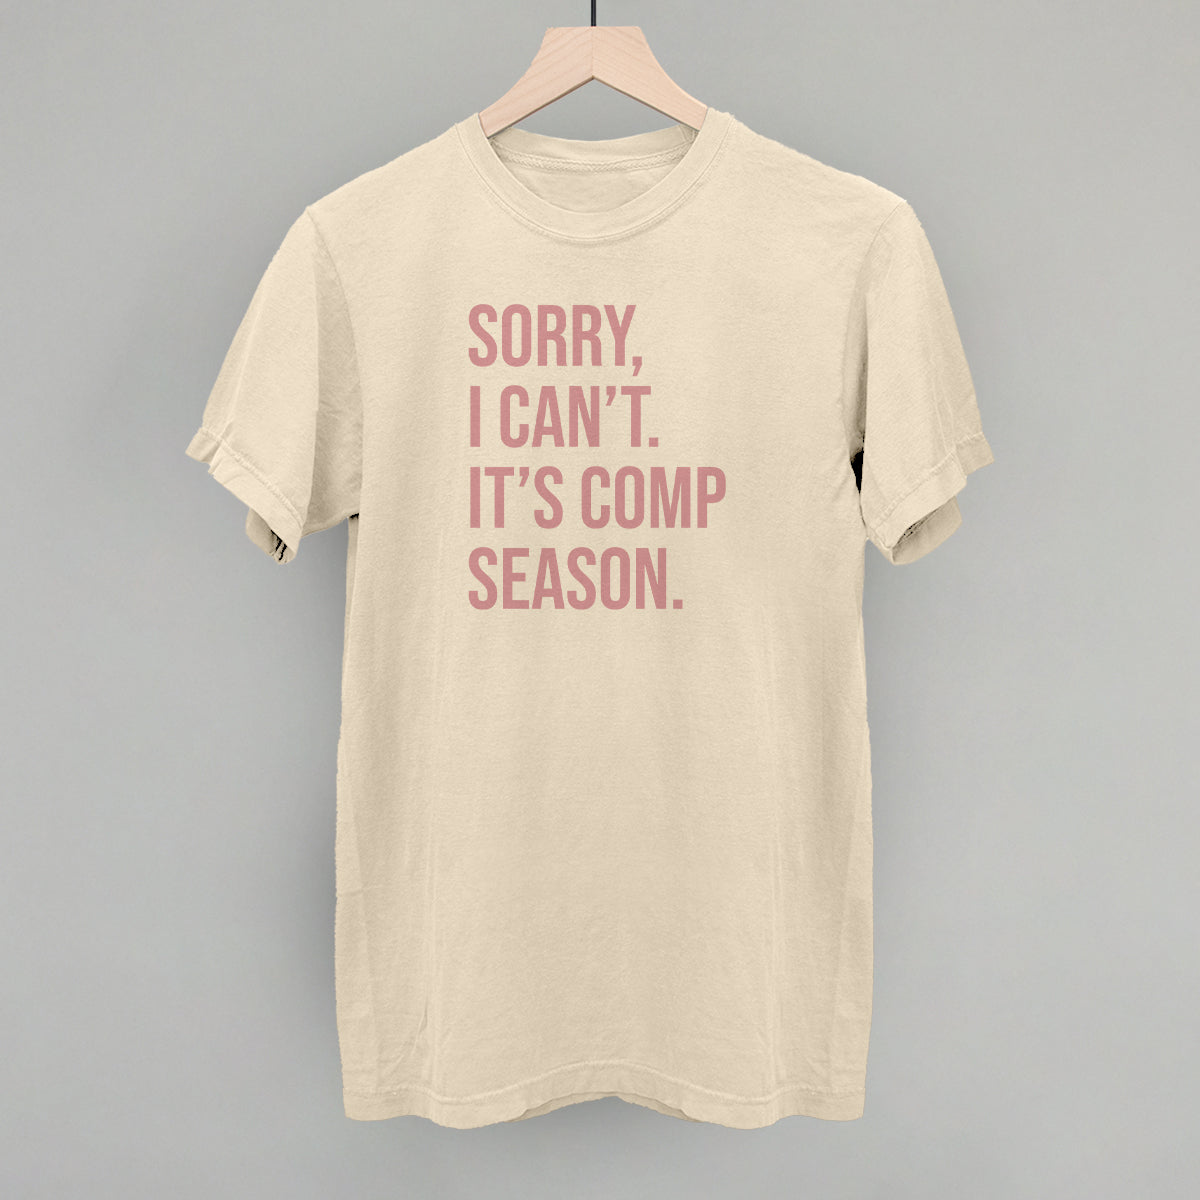 Sorry, I Can't. It's Comp Season.